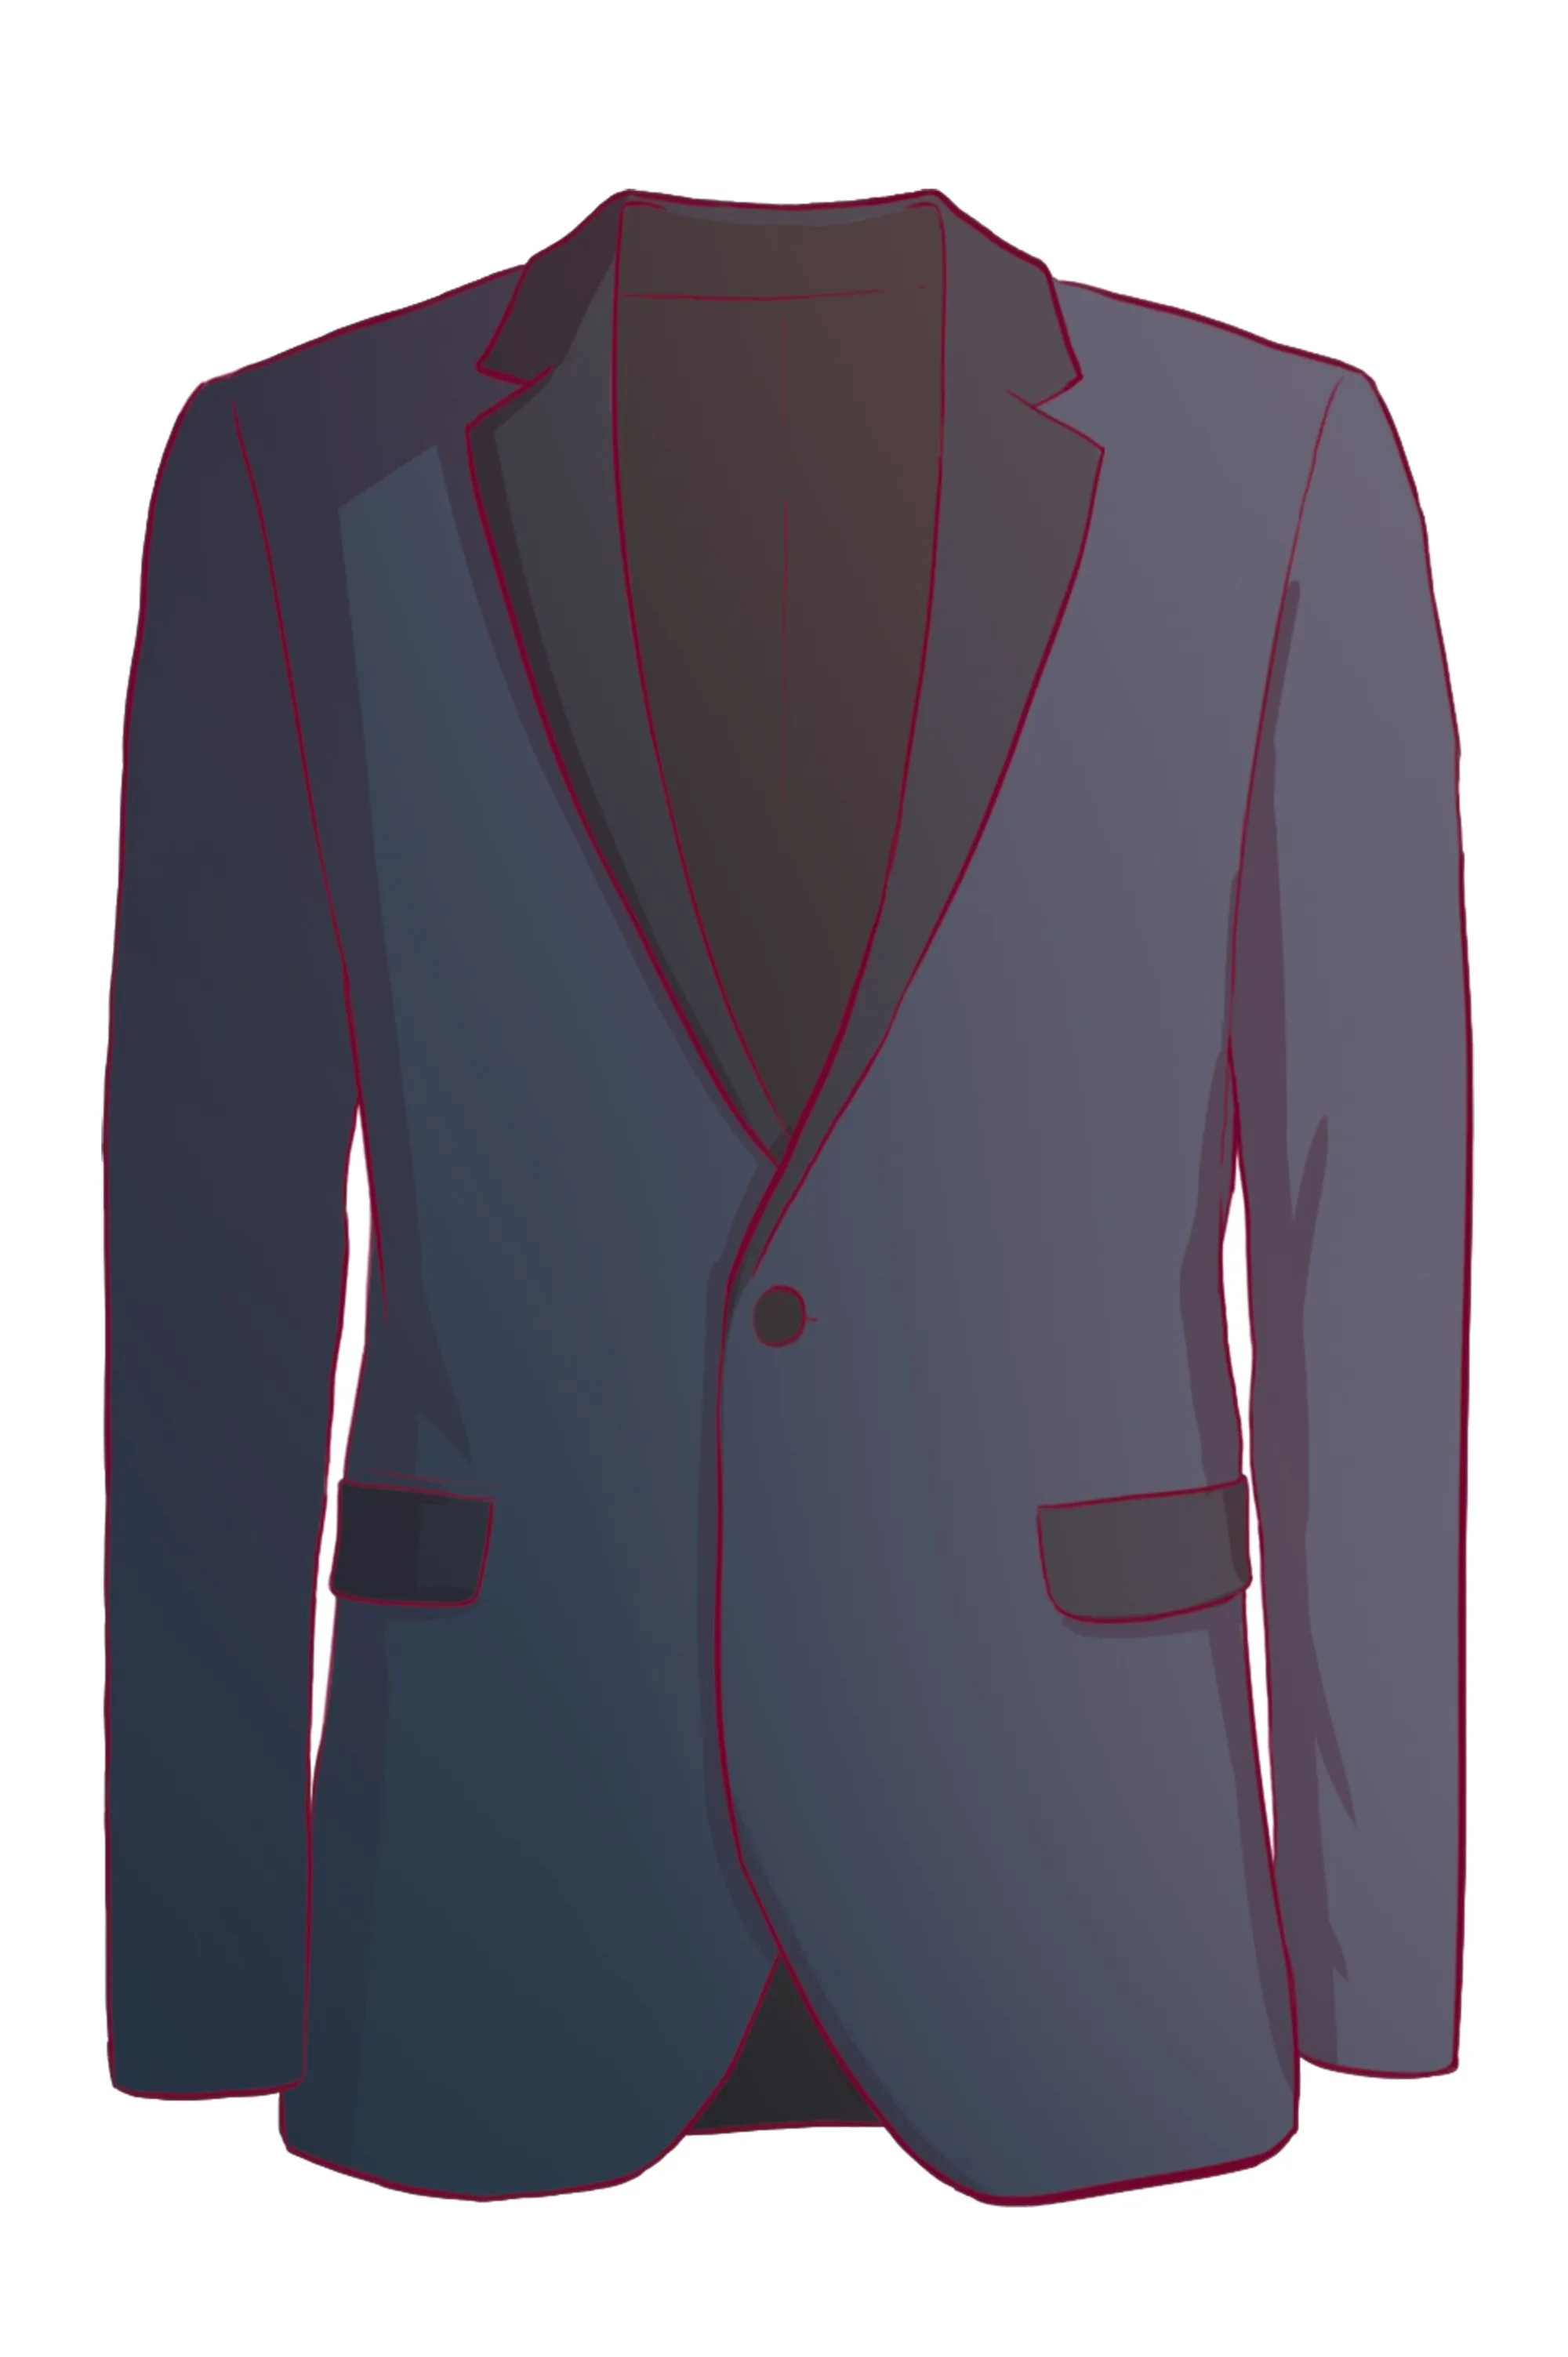 A dark blue blazer